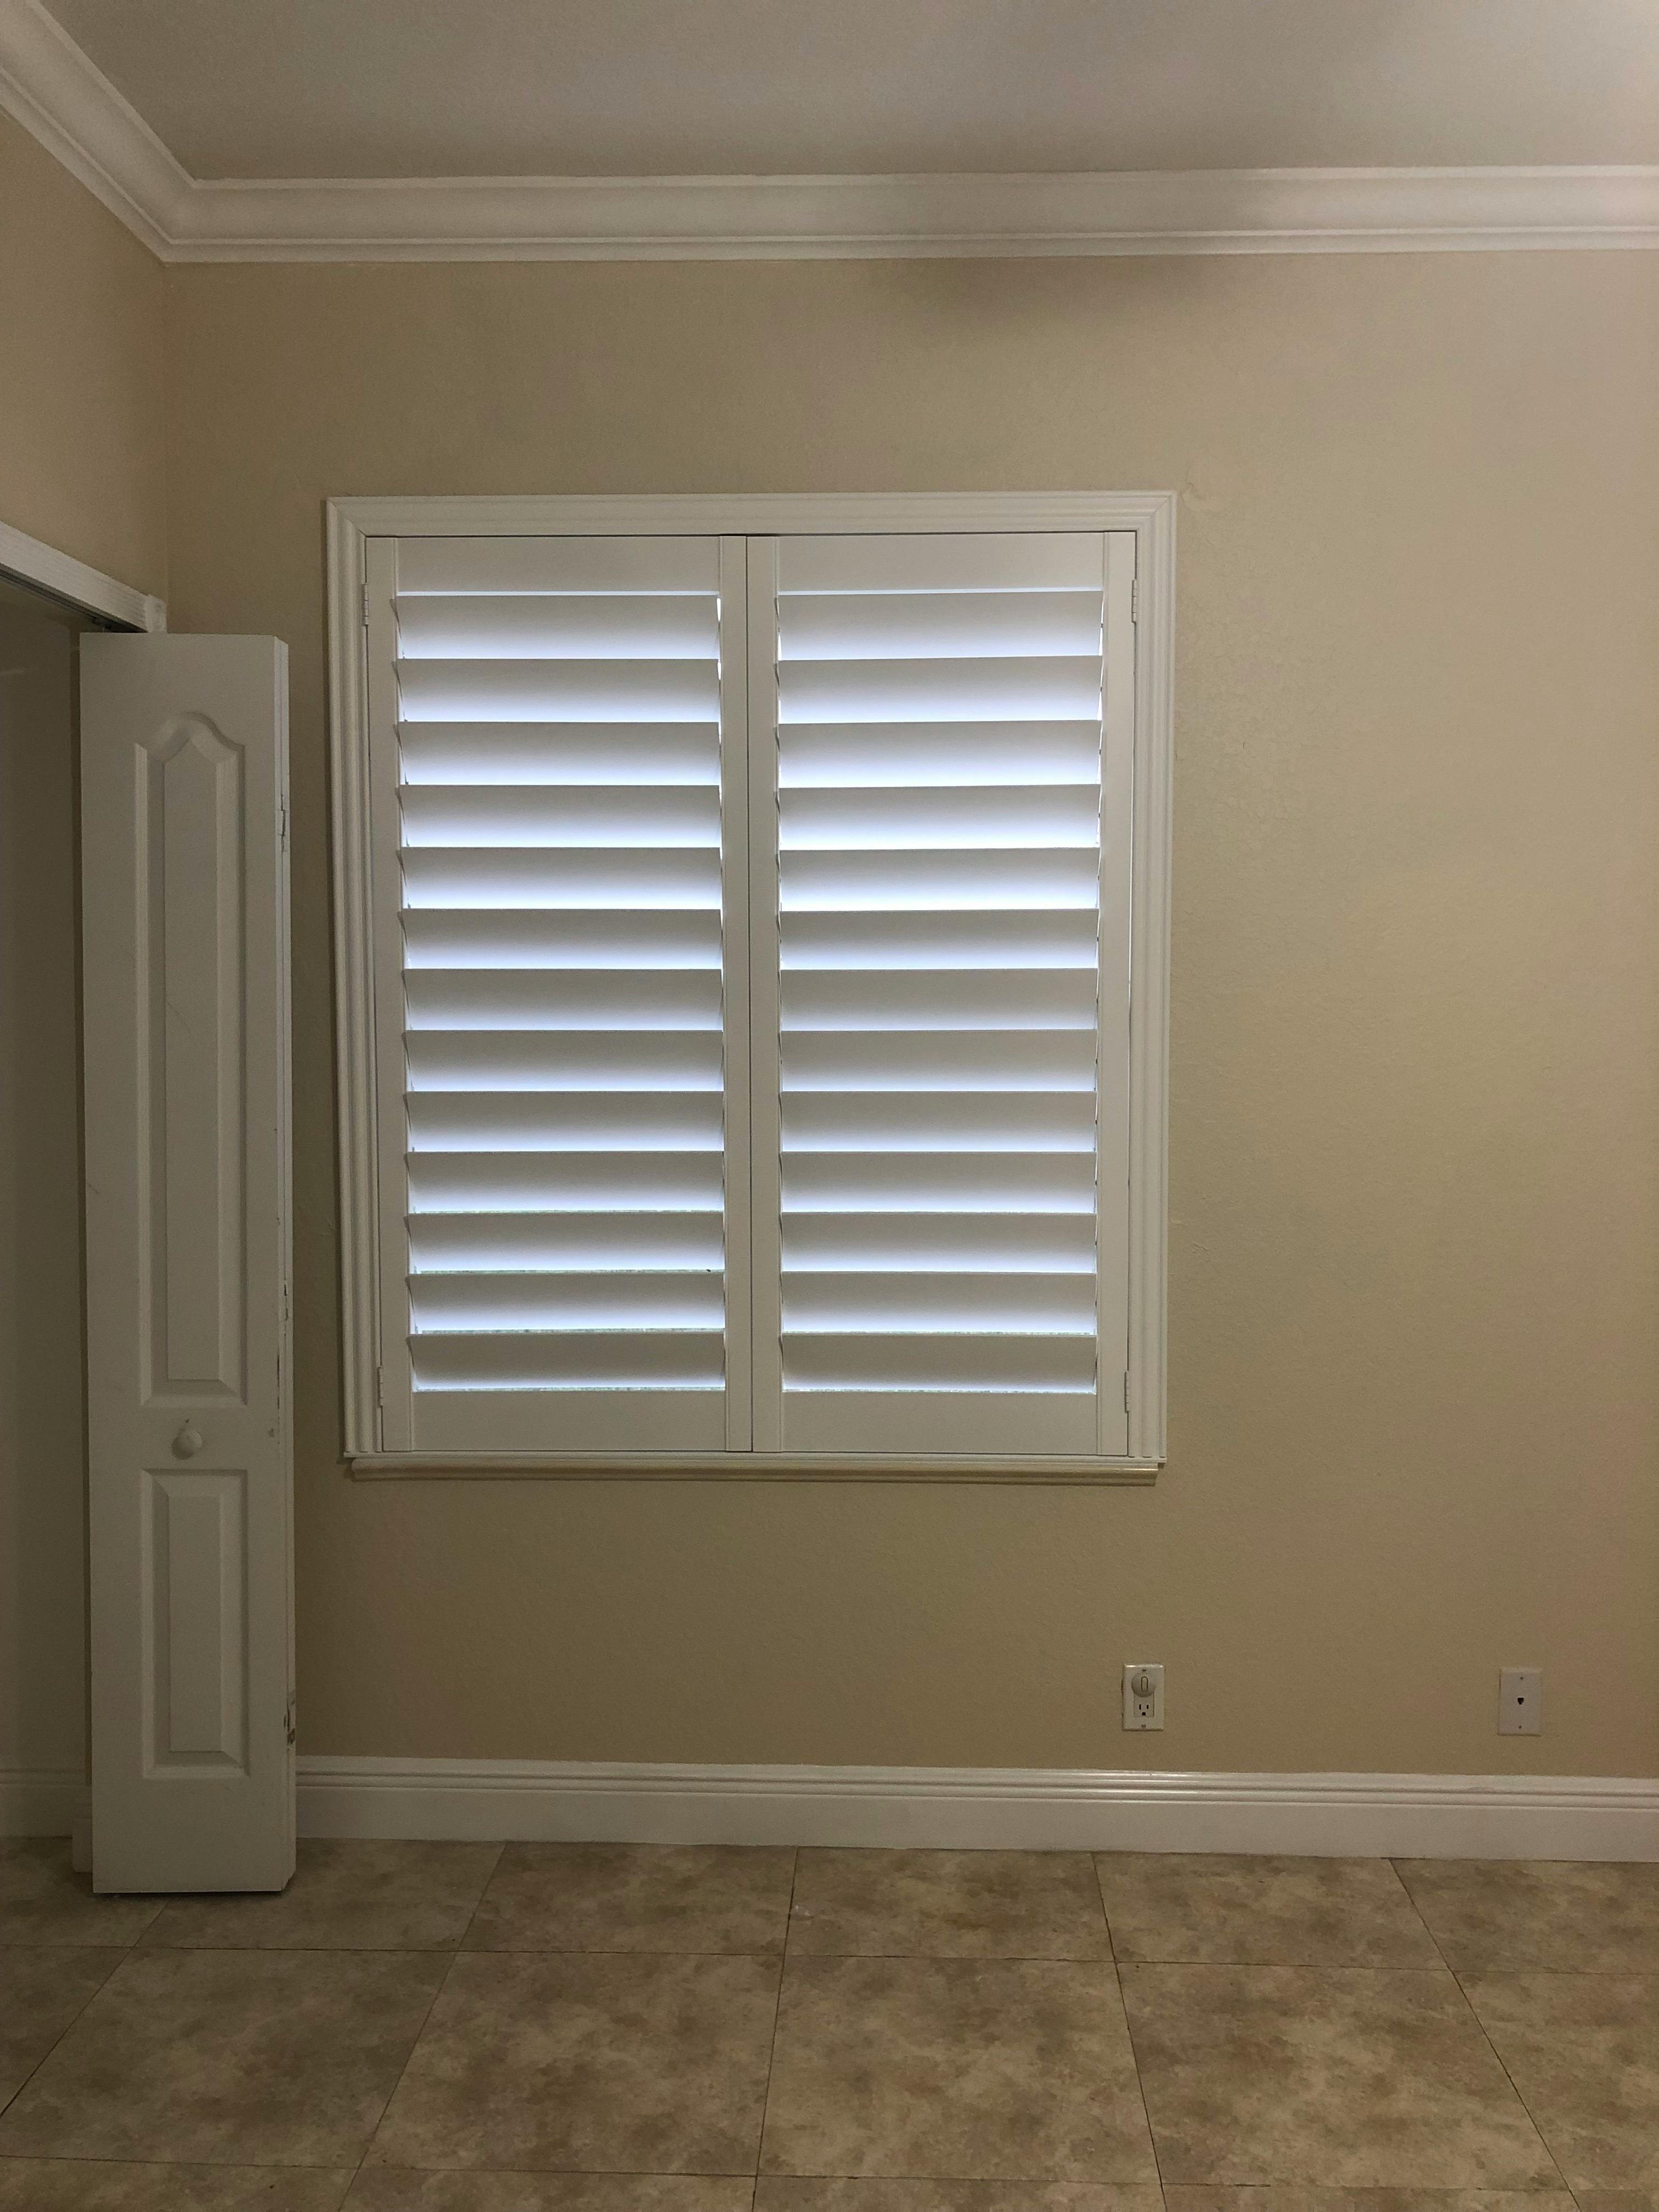 Free stock photo of shutter, shutters, window blinds